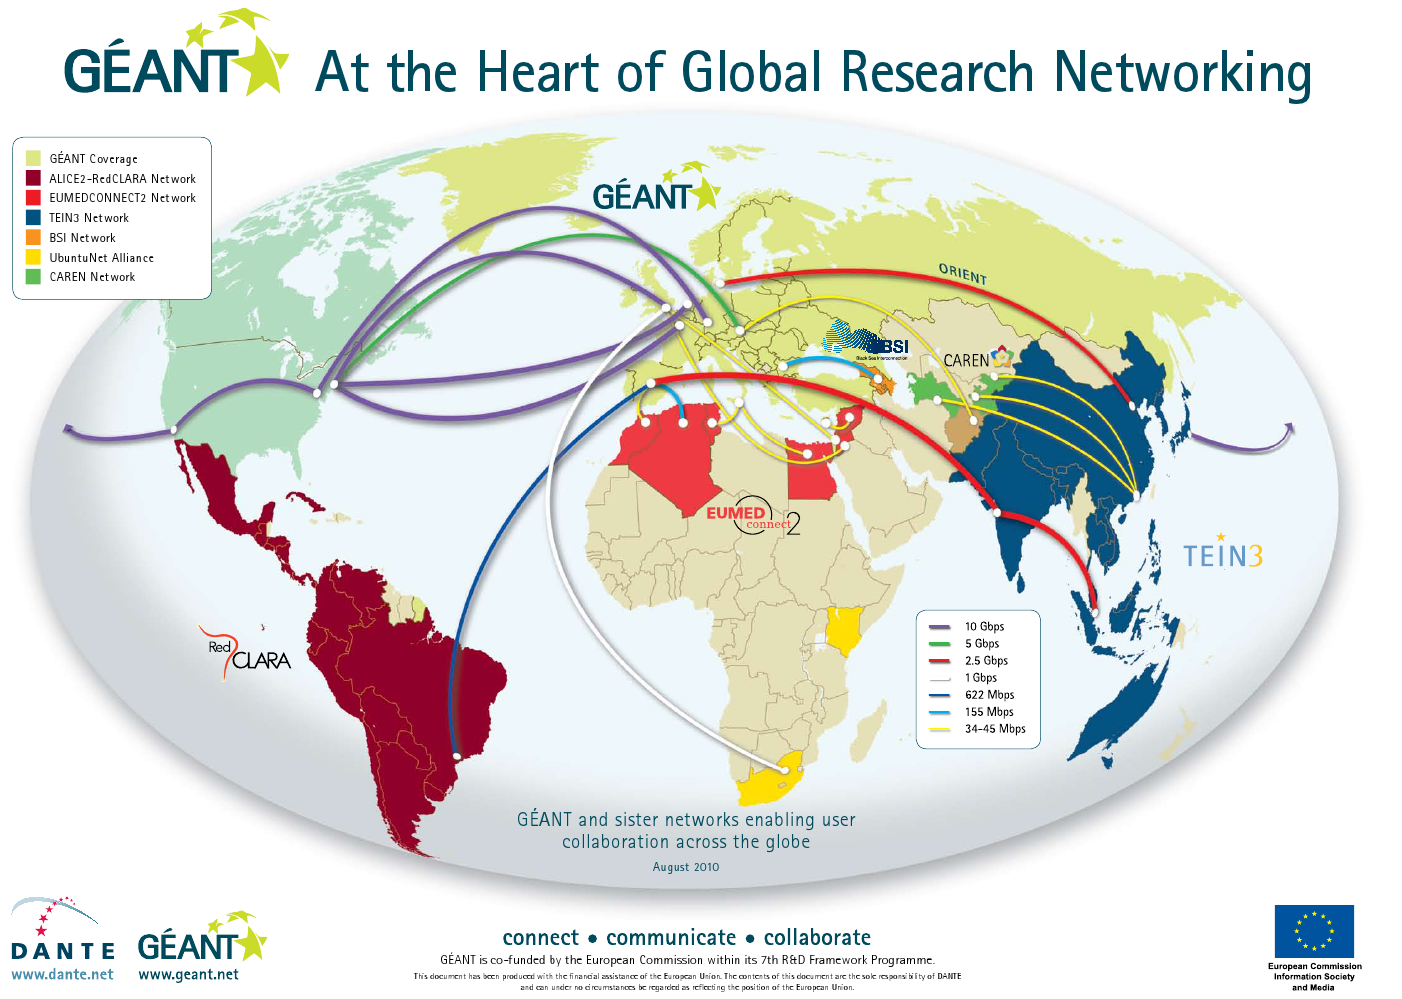 Světová akademická síť GÉANT Coverage ALICE2-RedCLARA Network EUMEDCONNECT2 Network TEIN3 Network BSI Network UbuntuNet Alliance CAREN